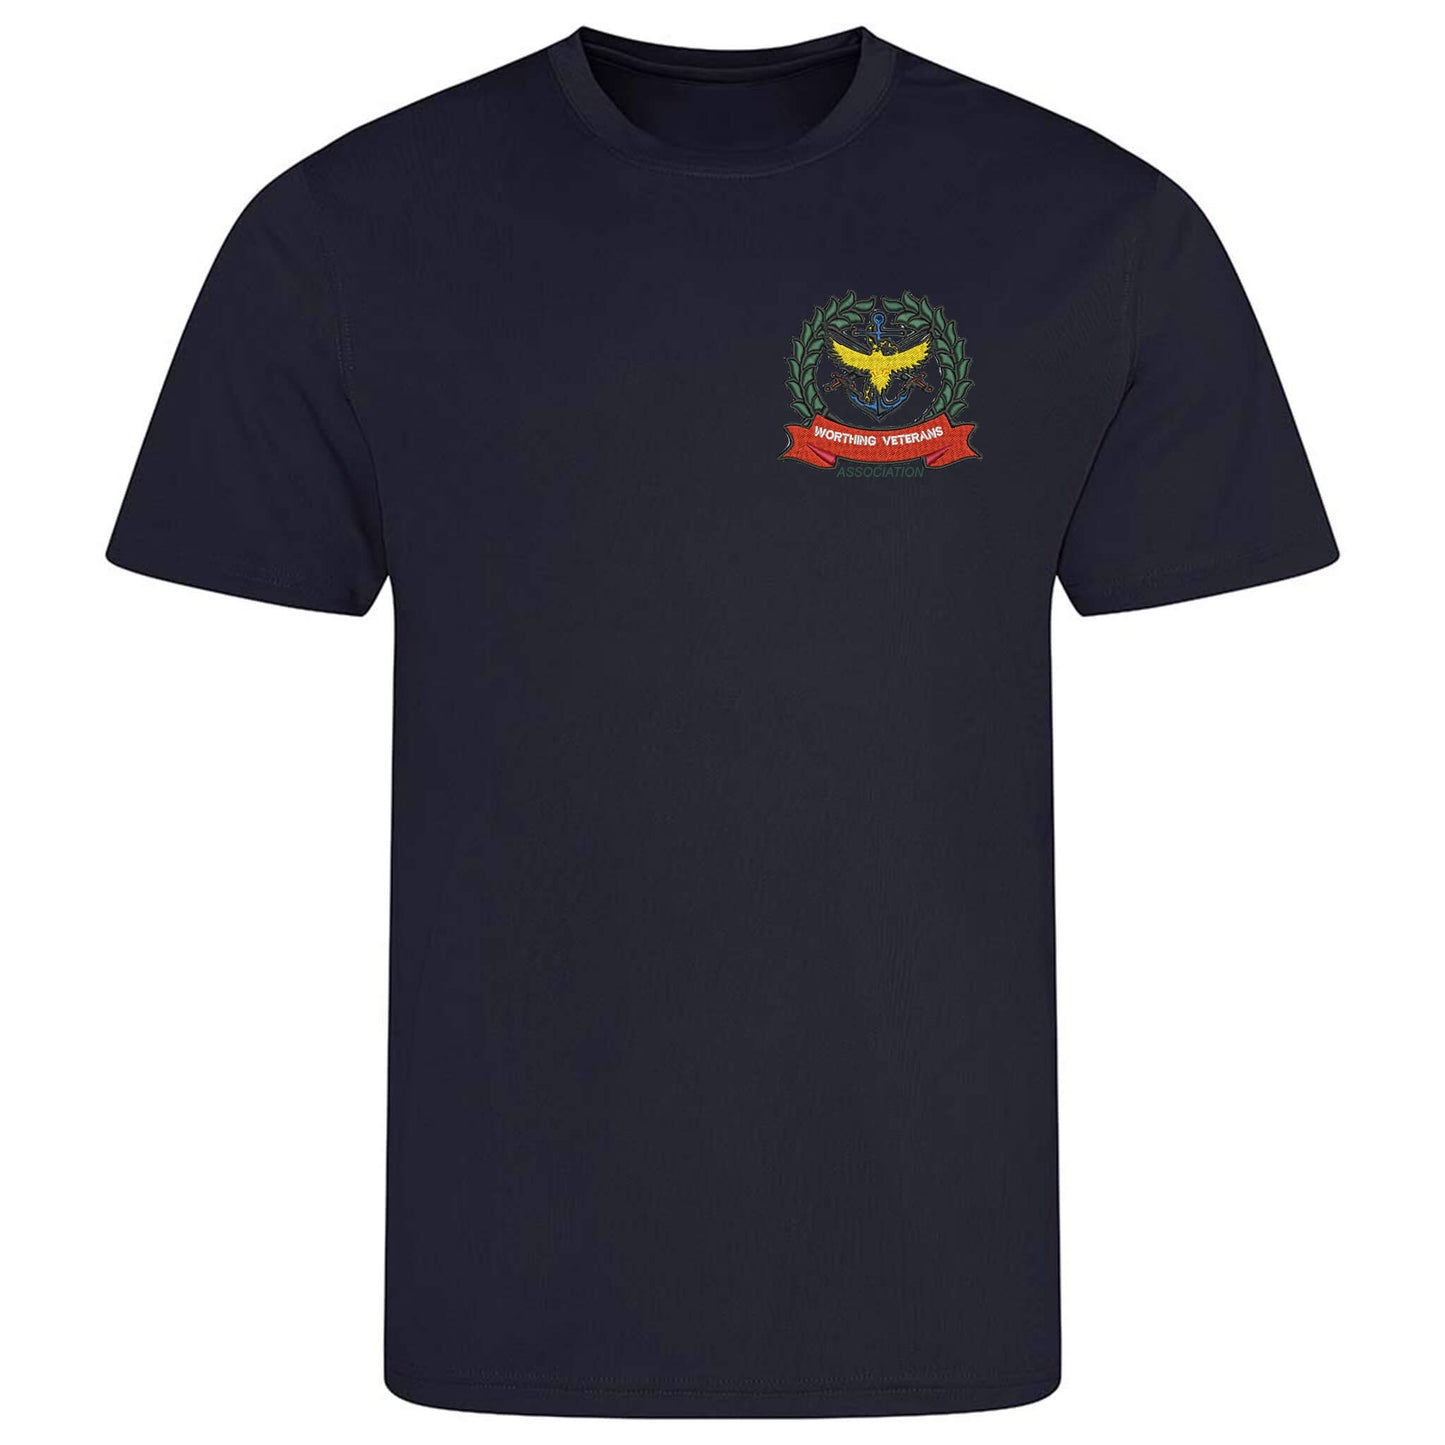 Worthing Veterans Association Sports T-Shirt